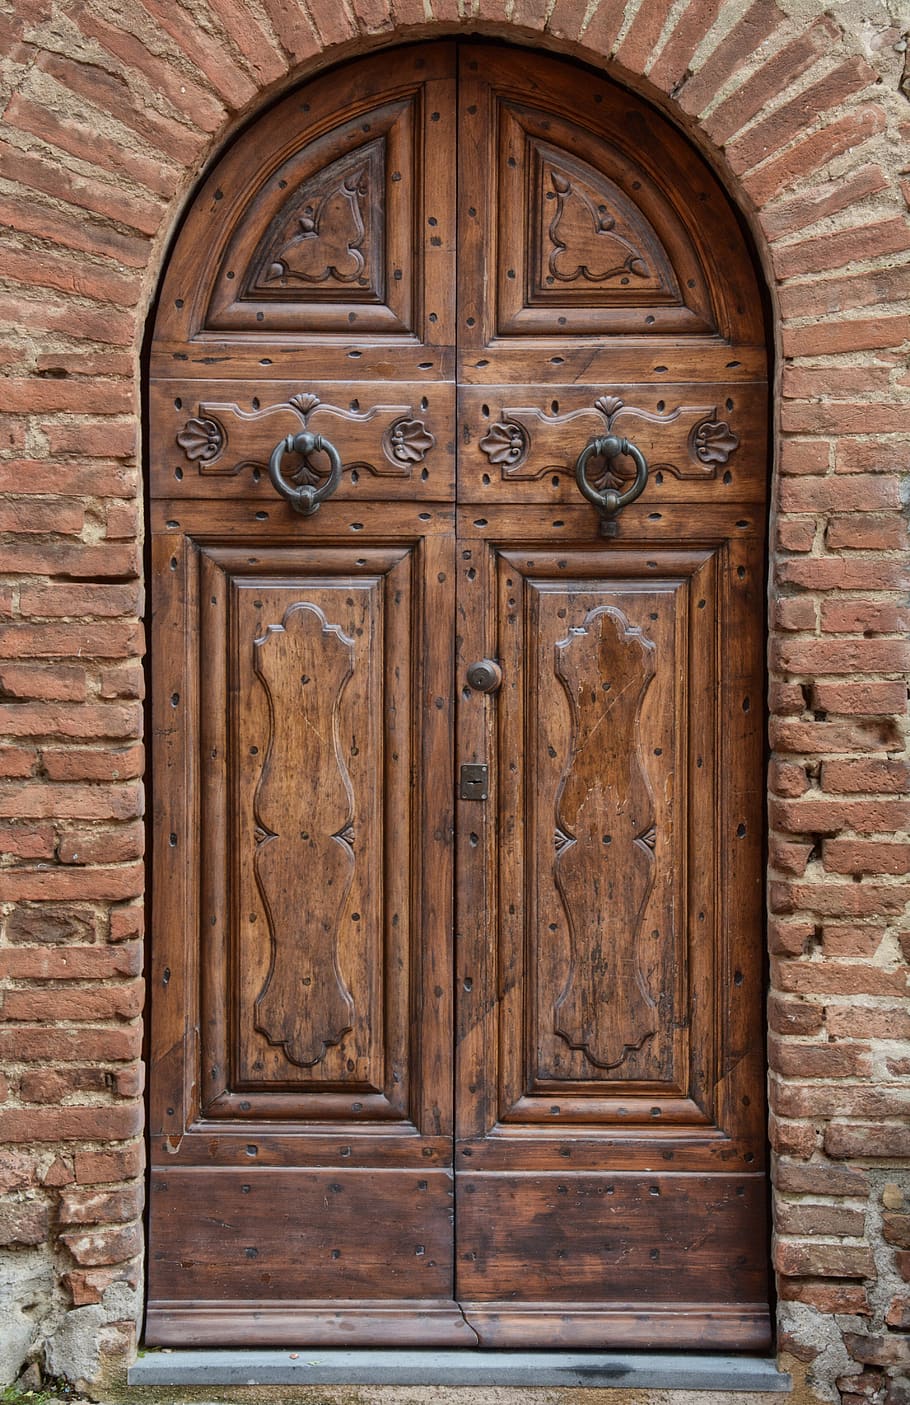 door, old, wood, wooden, old door, entrance, wood - material, closed, architecture, building exterior